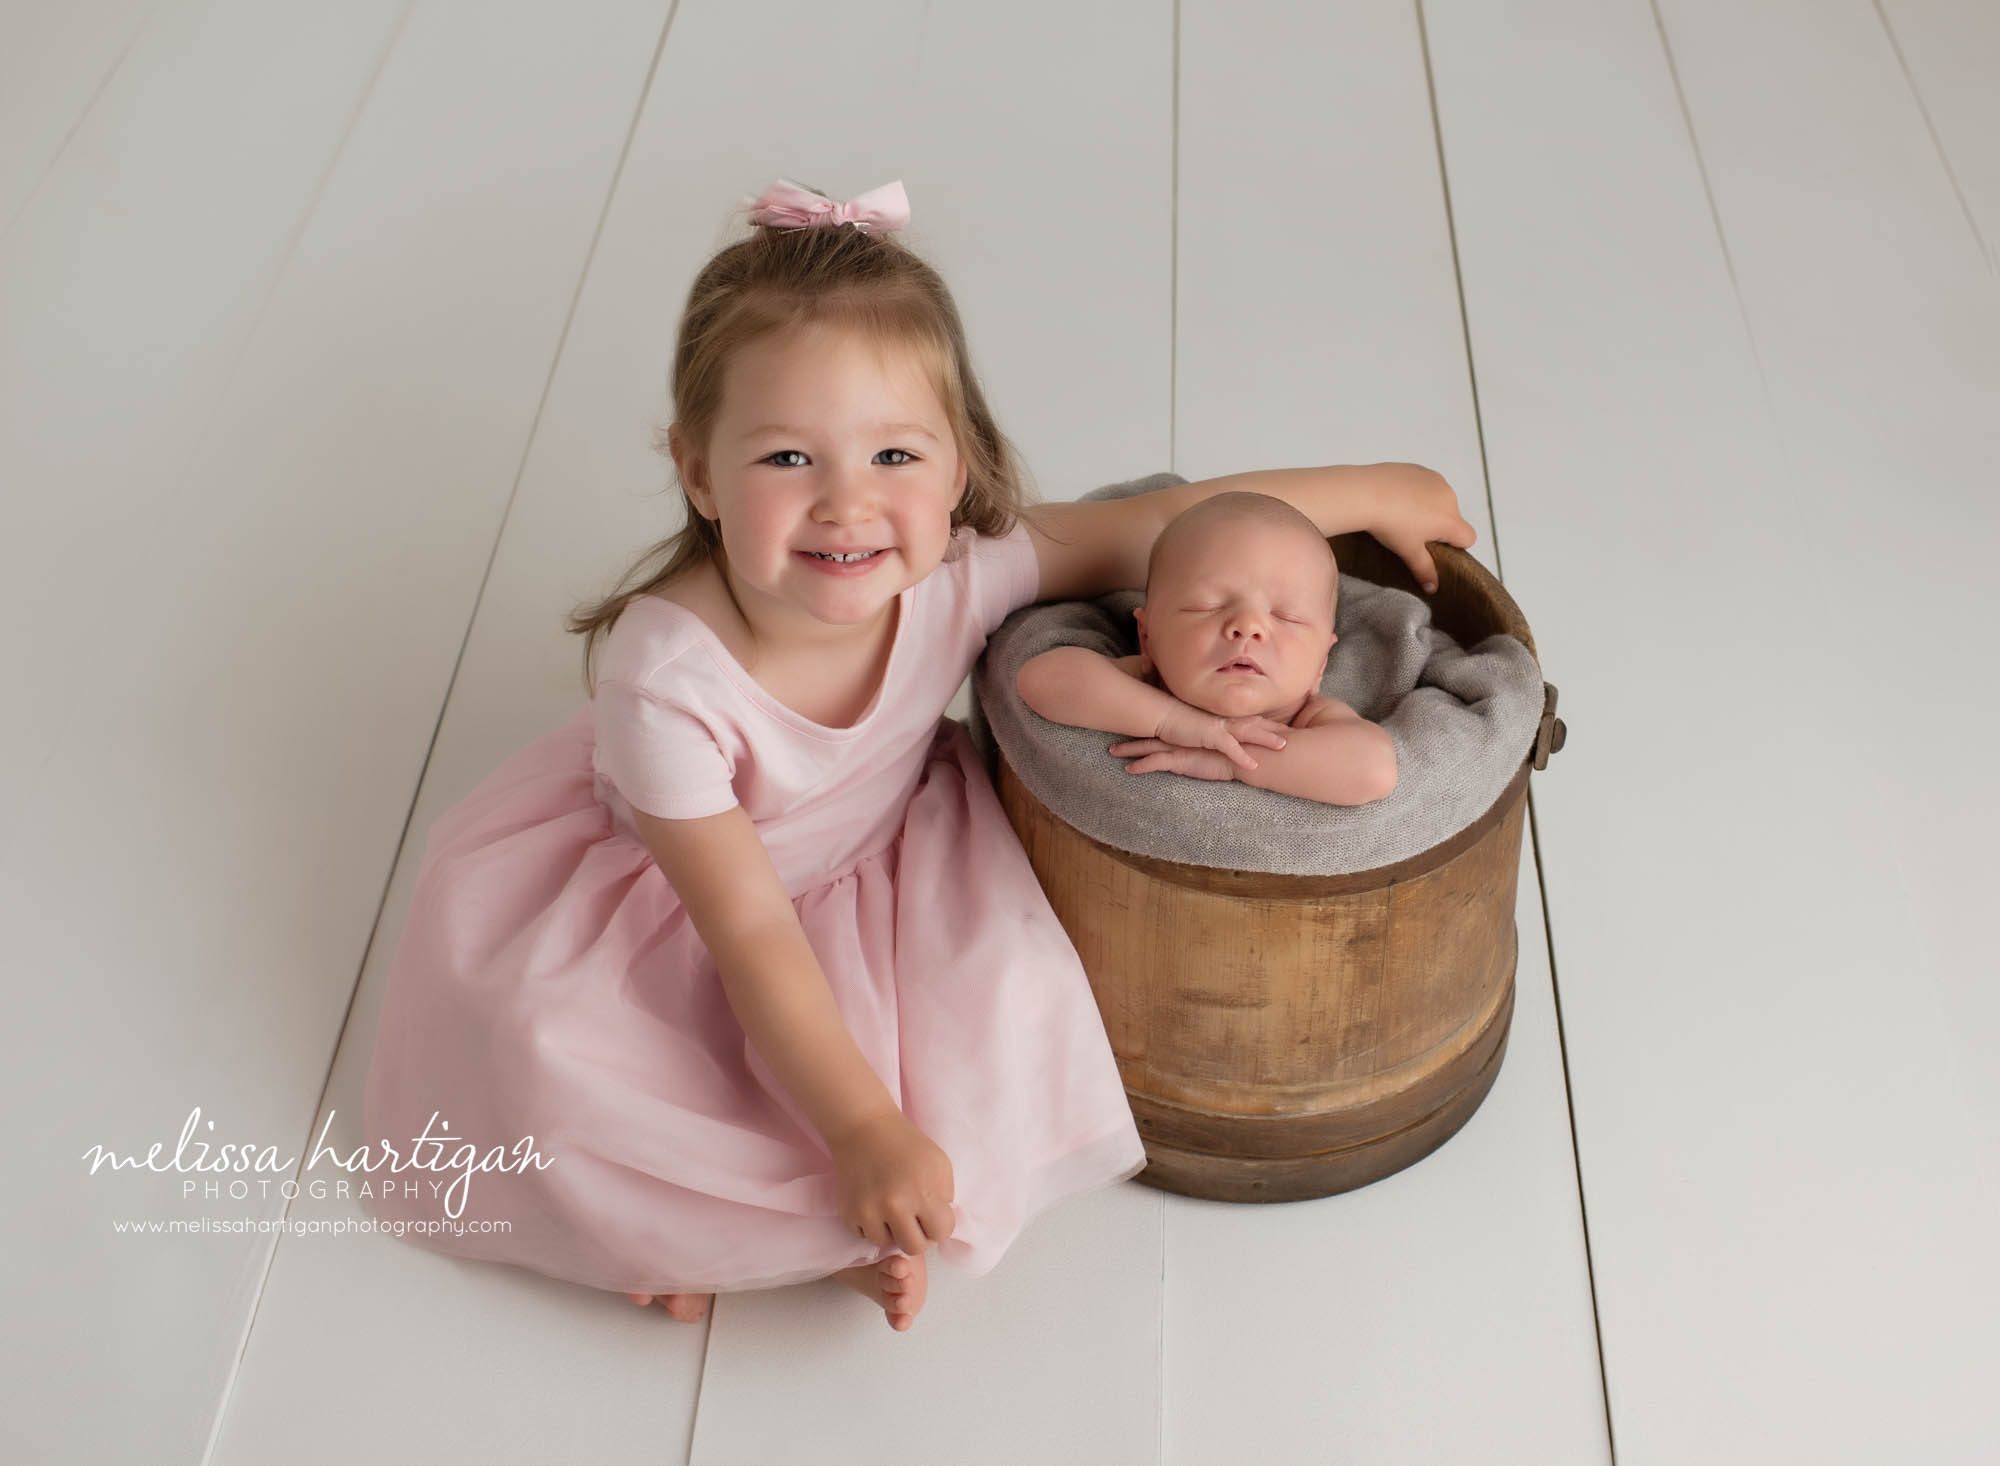 newborn baby boy posed in wooden bucket with big sister in pink dress sitting beside bucket